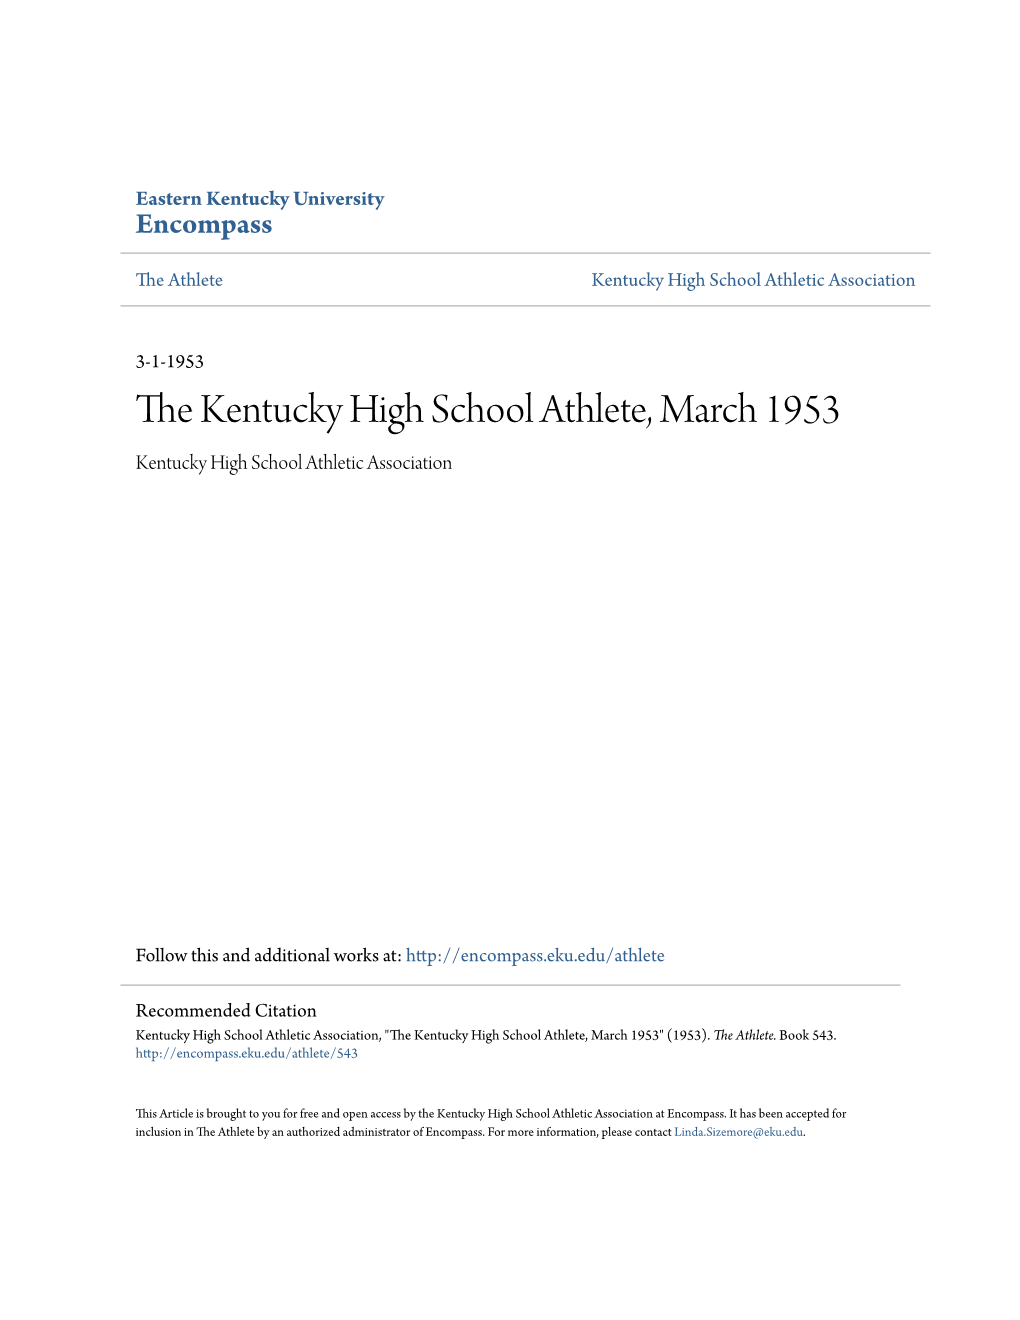 The Kentucky High School Athlete, March 1953 Kentucky High School Athletic Association